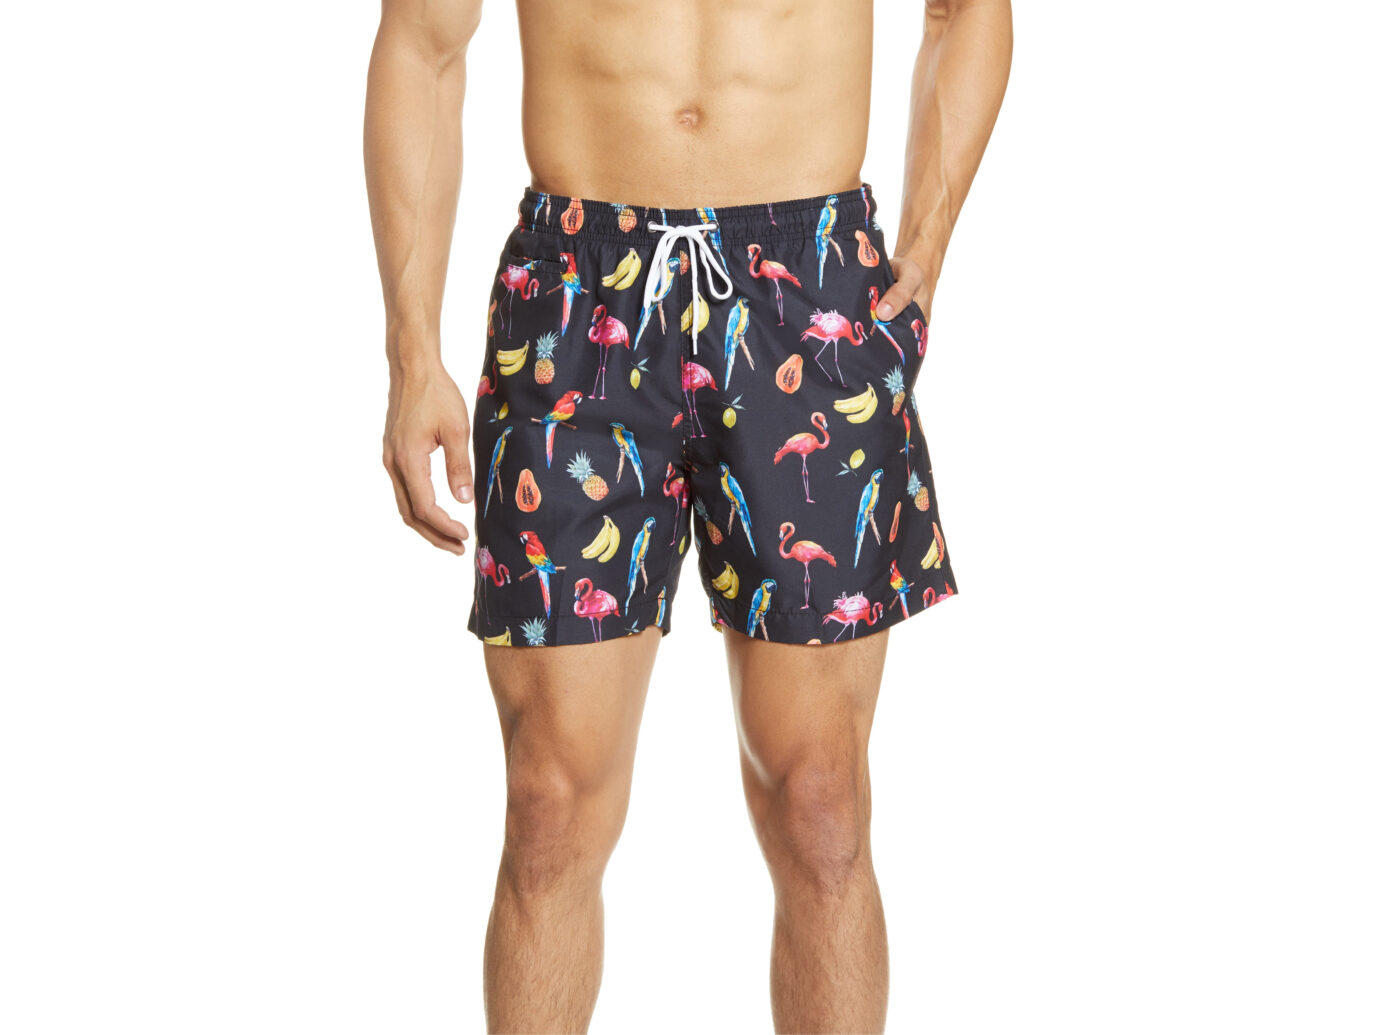 WUAI-Men Swim Trunks Drawstring Elastic Waist Quick Dry Beach Shorts Novelty 3D Graphic Printed Summer Swimming Shorts